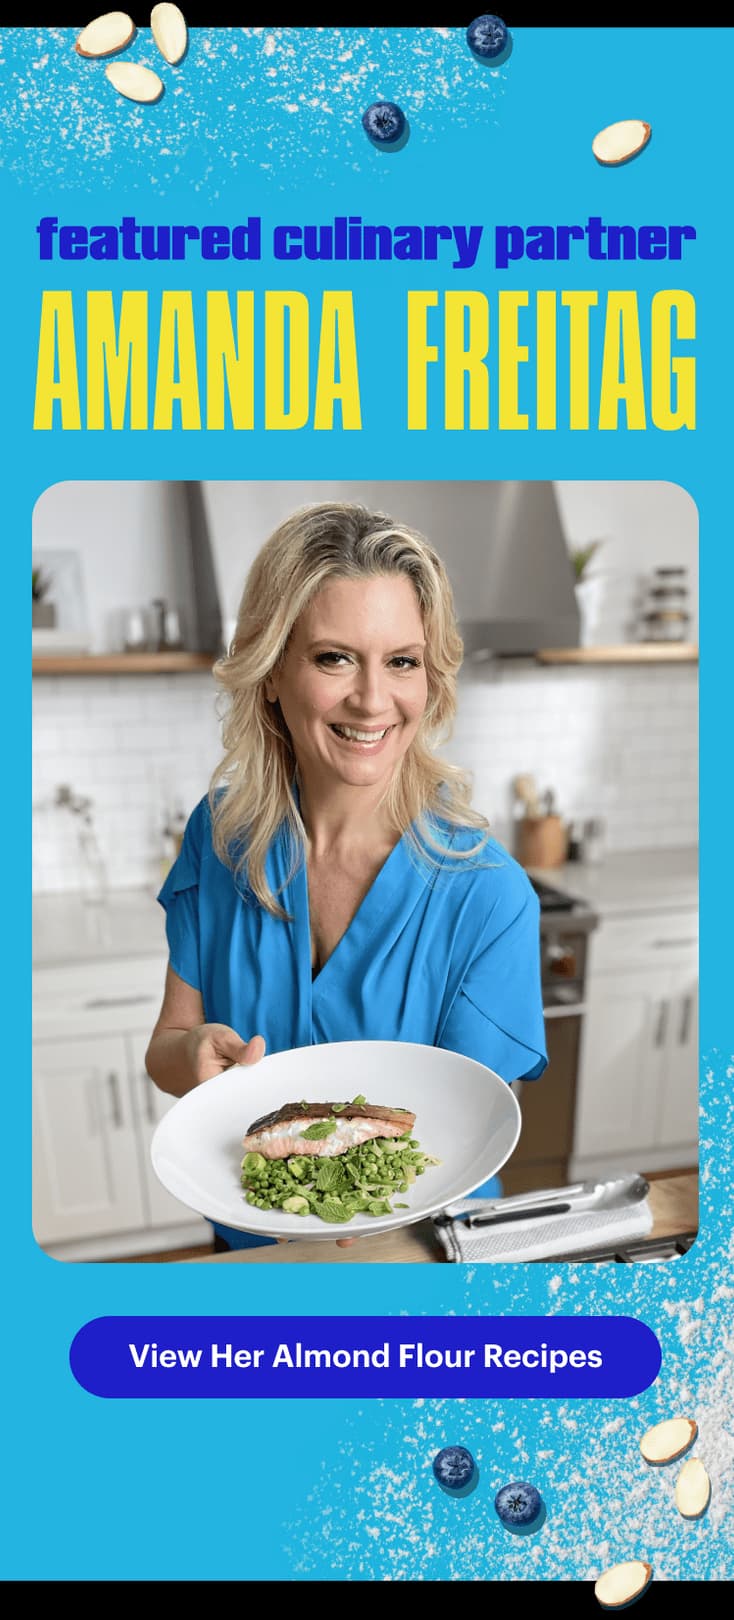 Featured Culinary Partner Amanda Freitag. View Her Almond Flour Recipes.